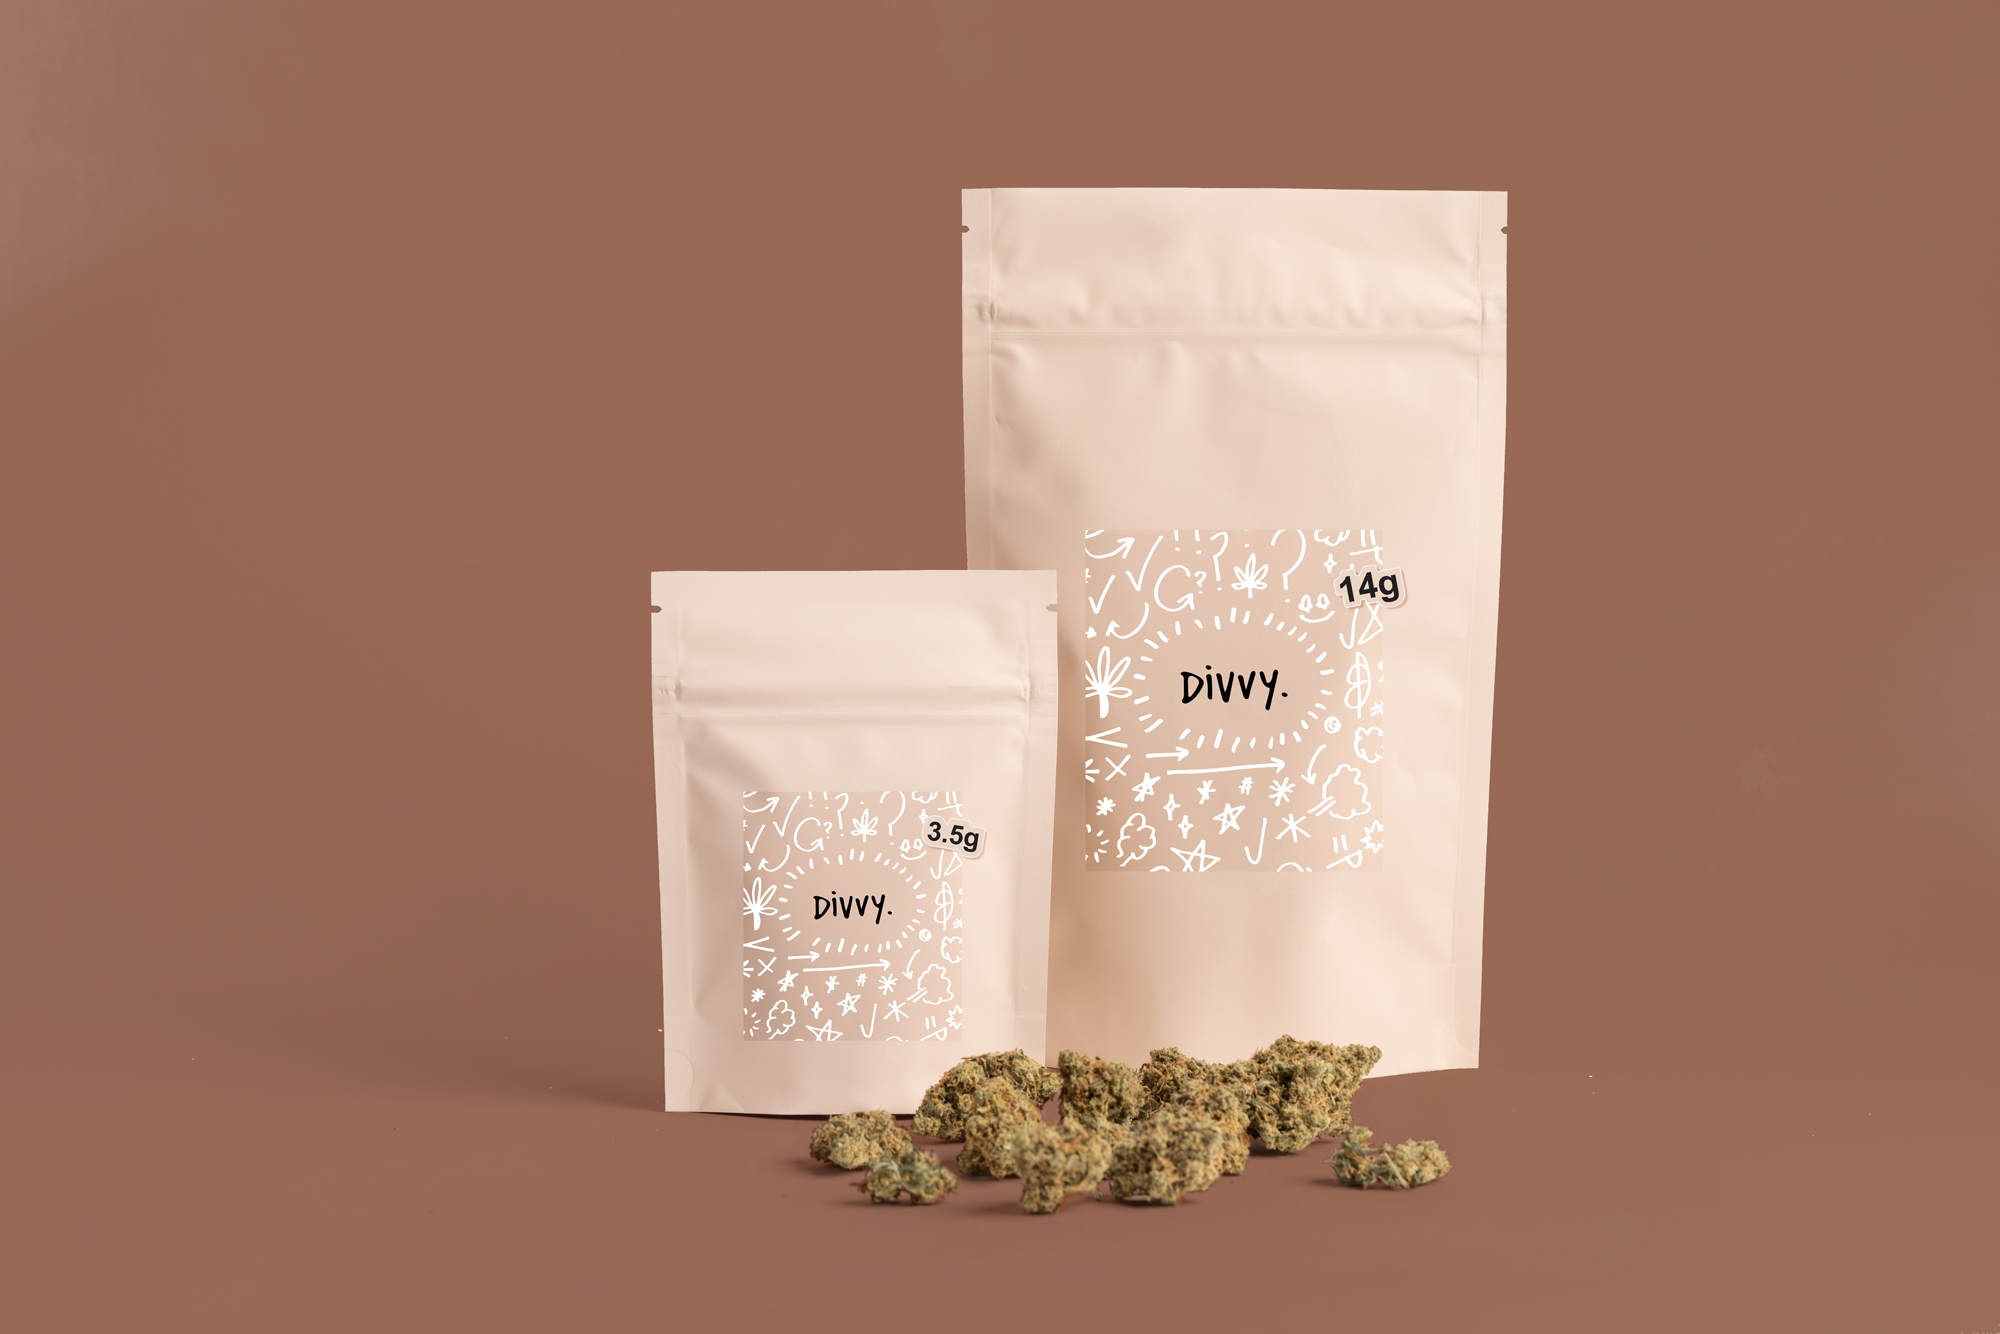 Aleafia Health’s Everyday Cannabis Brand Divvy Launches Large Format Dried Flower Portfolio